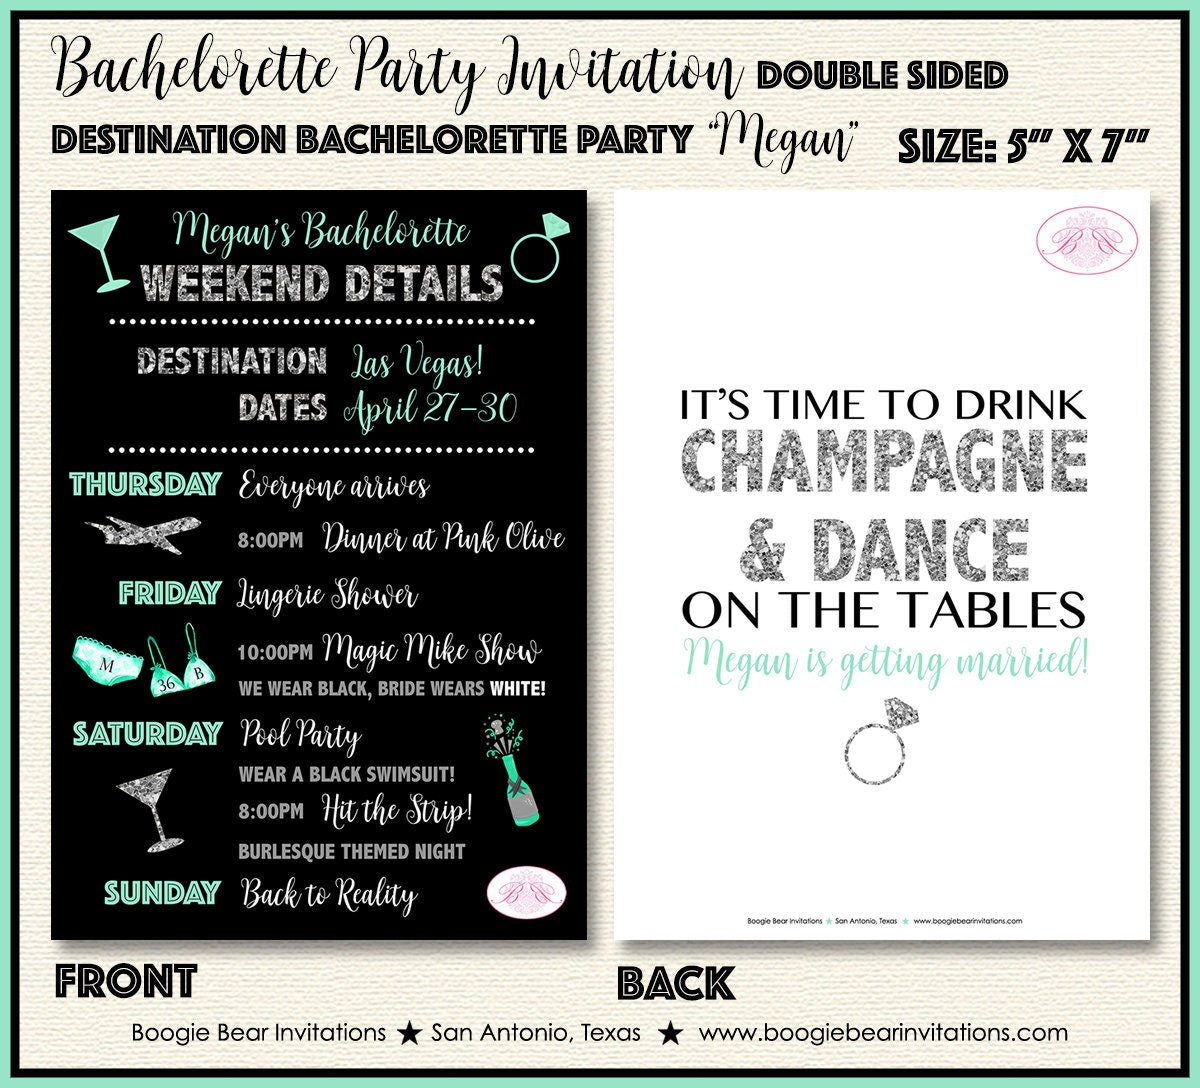 Destination Bachelorette Party Invitation Girl Mint Silver Black Itinerary Boogie Bear Invitations Megan Theme Paperless Printable Printed